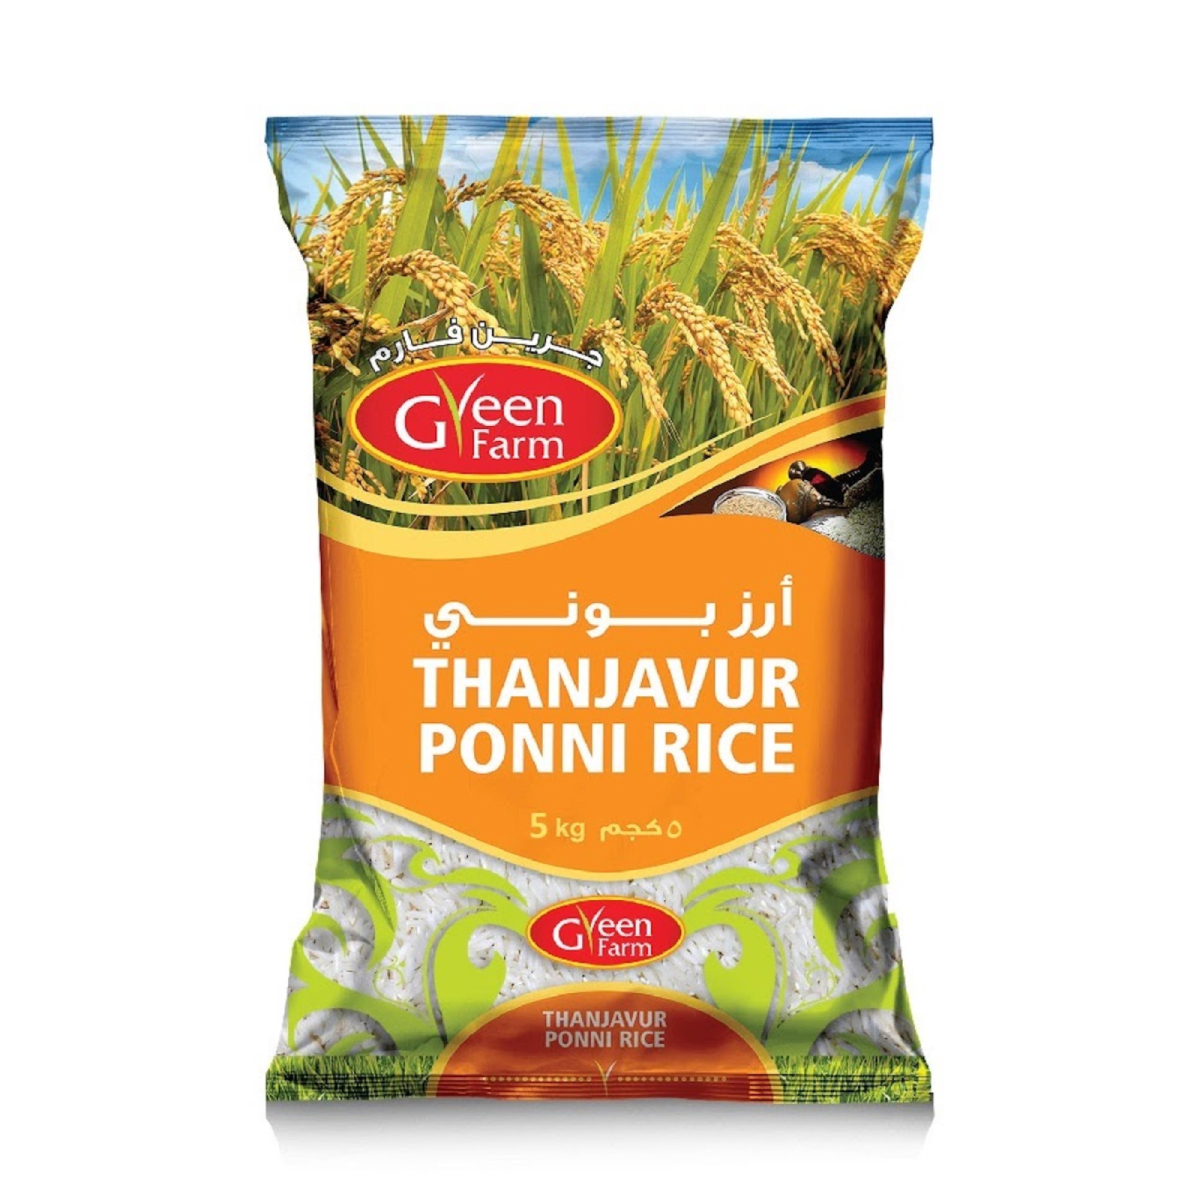 Green Farm Thanjavur Ponni Rice 5 kg